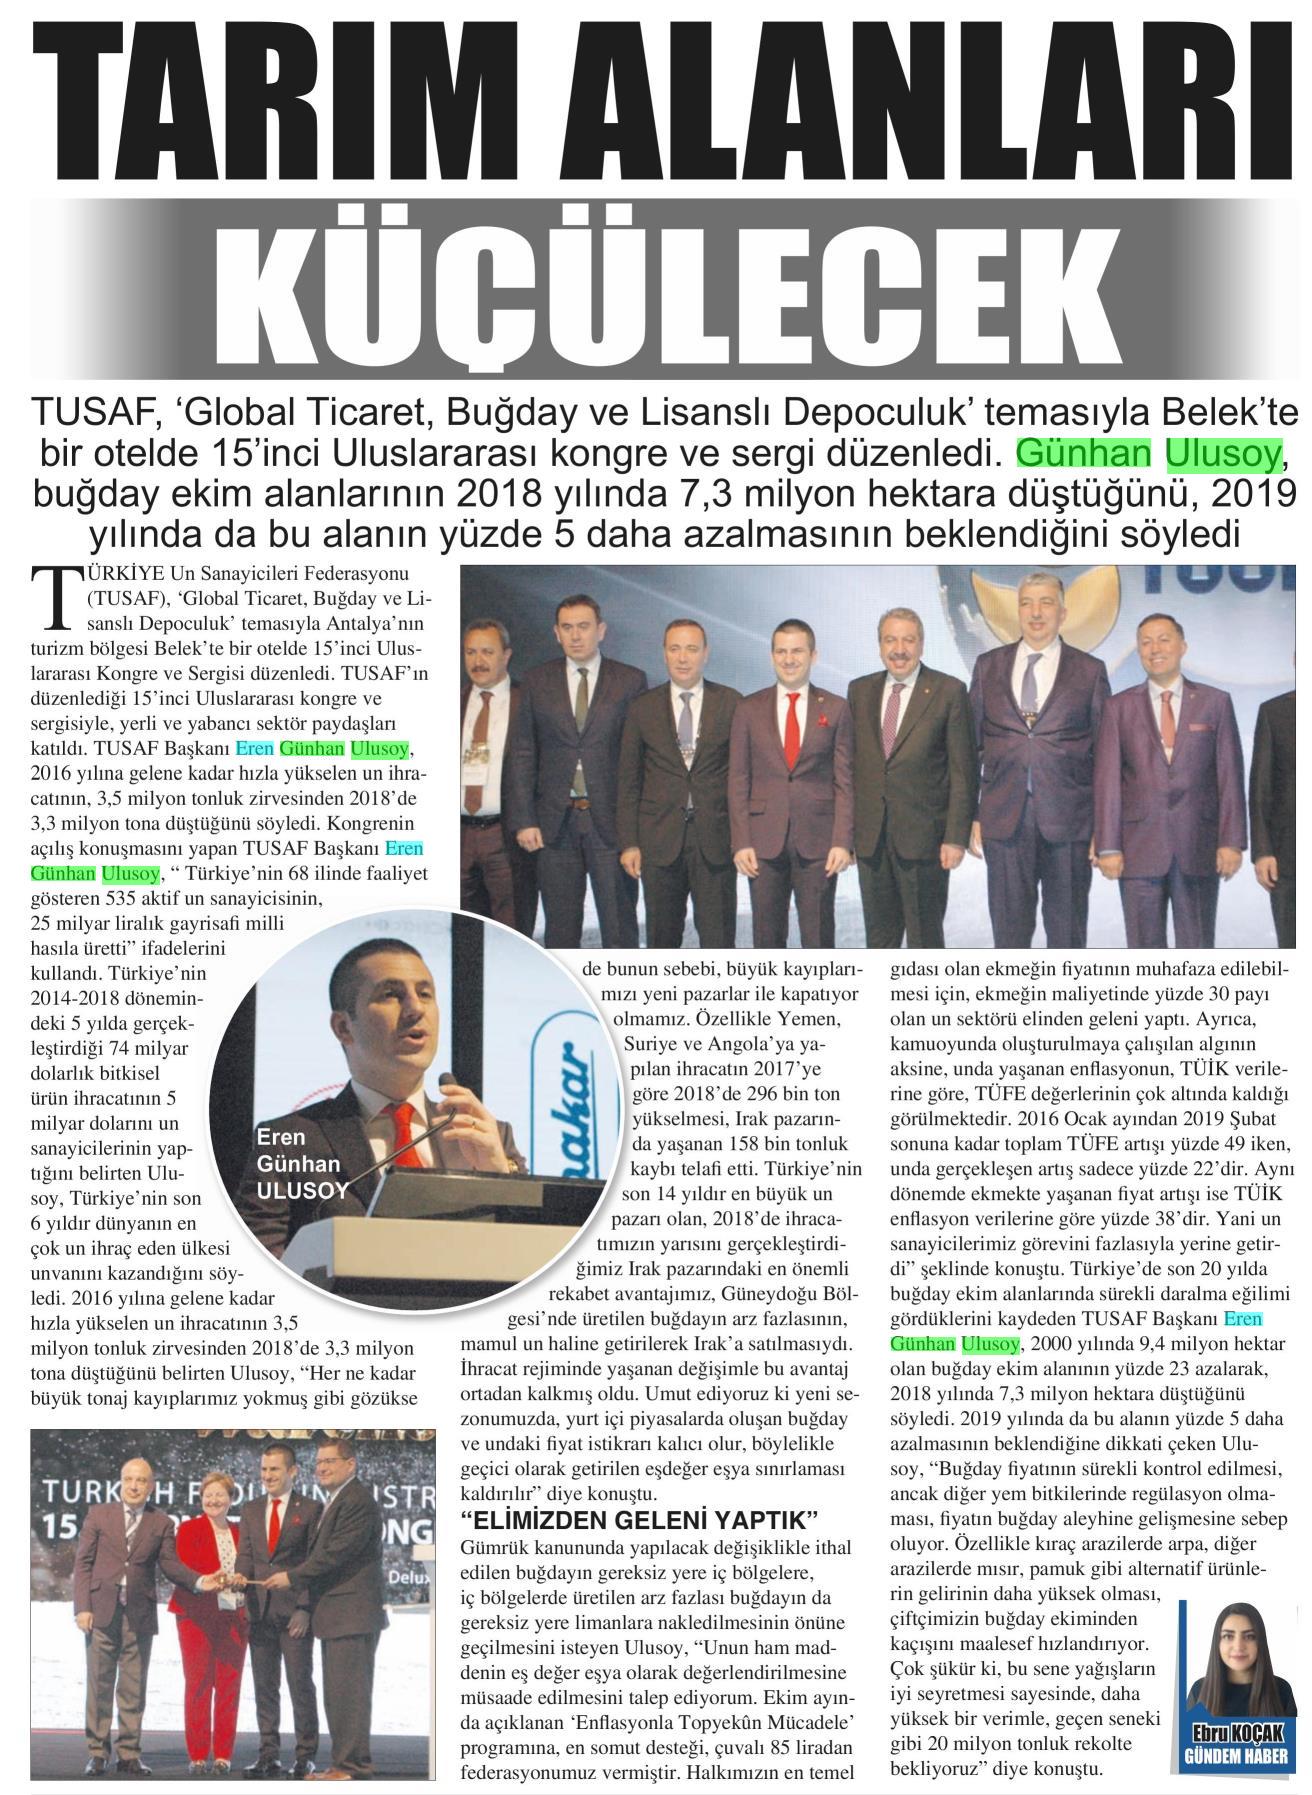 TUSAF Antalya Gündem 2. 27.04.2019.jpeg